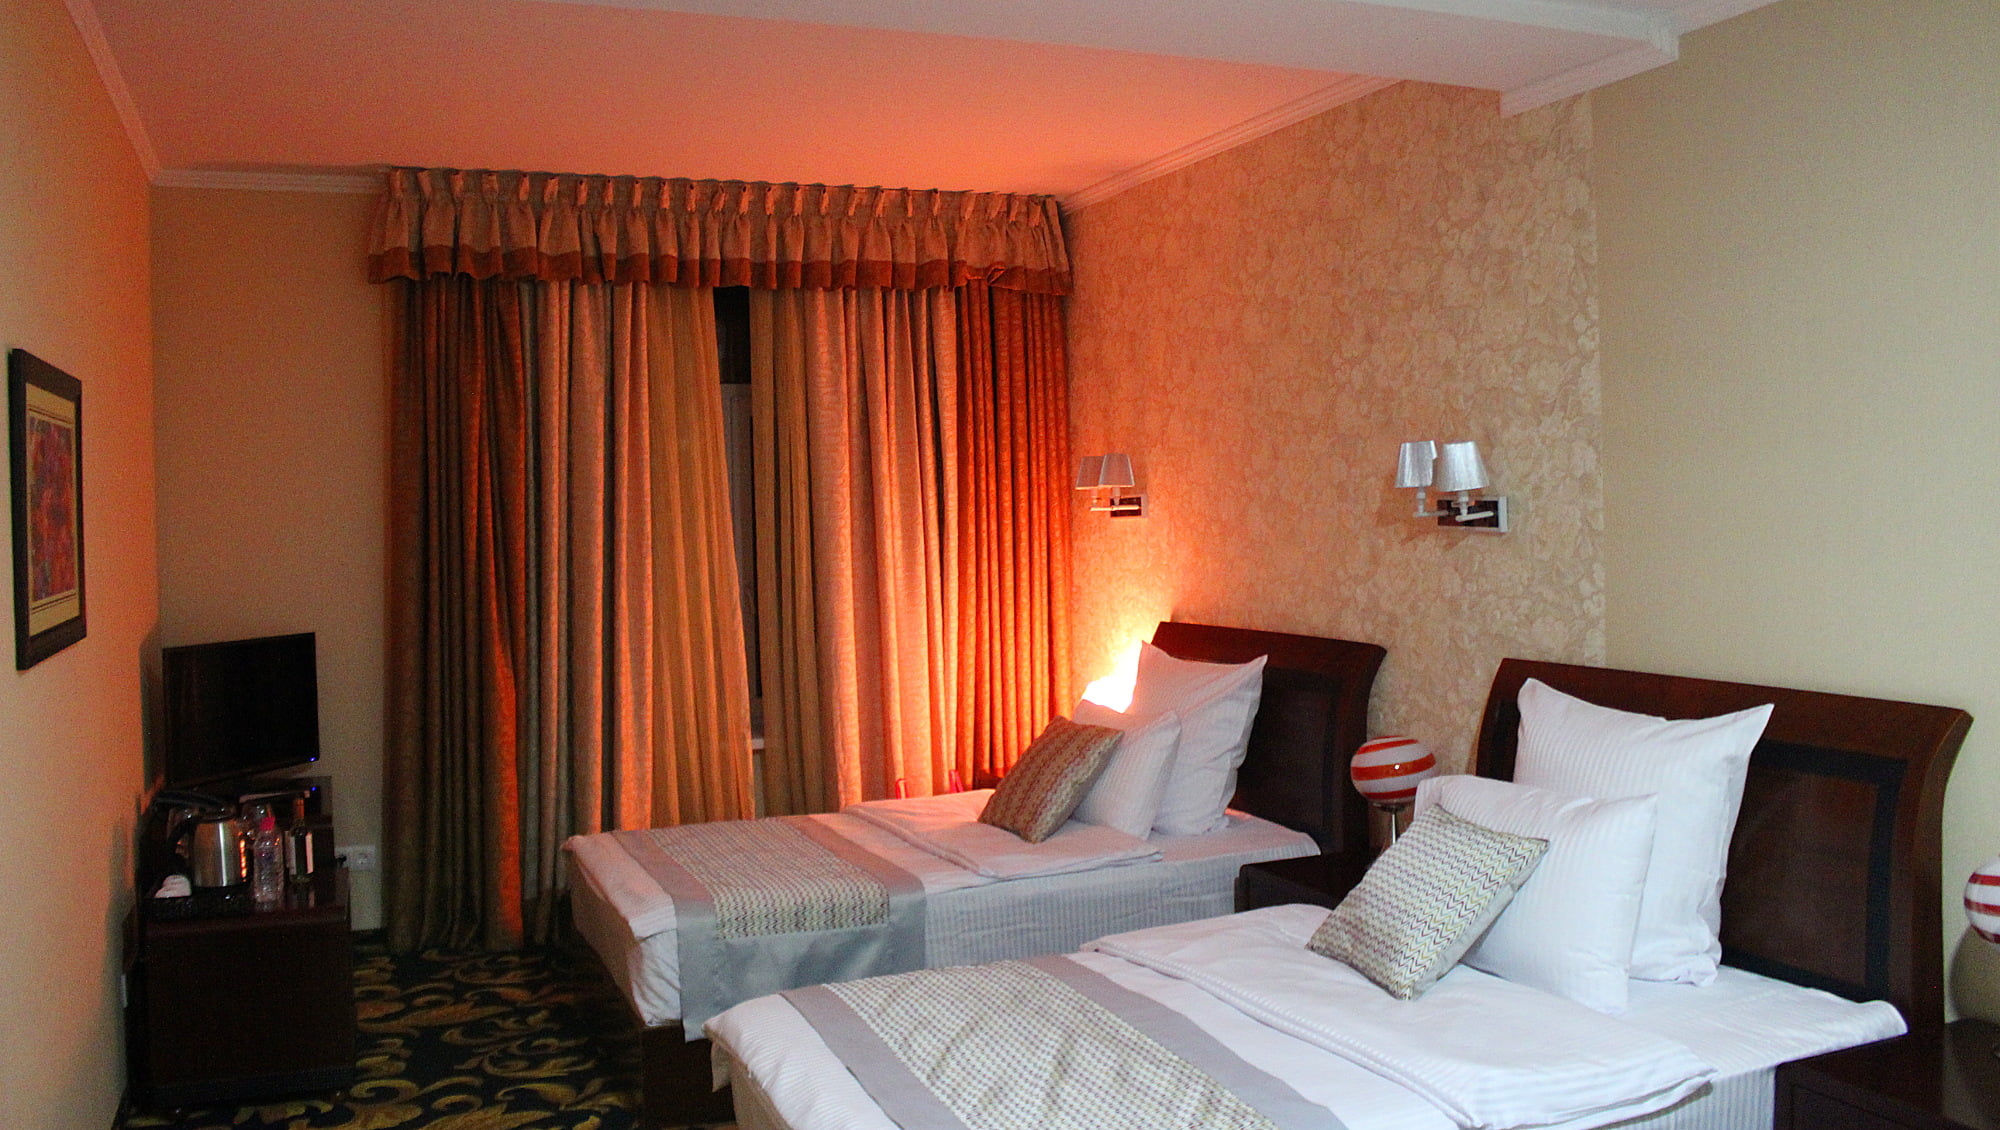 Solo travel Moldova. A quality hotel room in Chisinau, Moldova. Not many tourists are visiting Moldova.